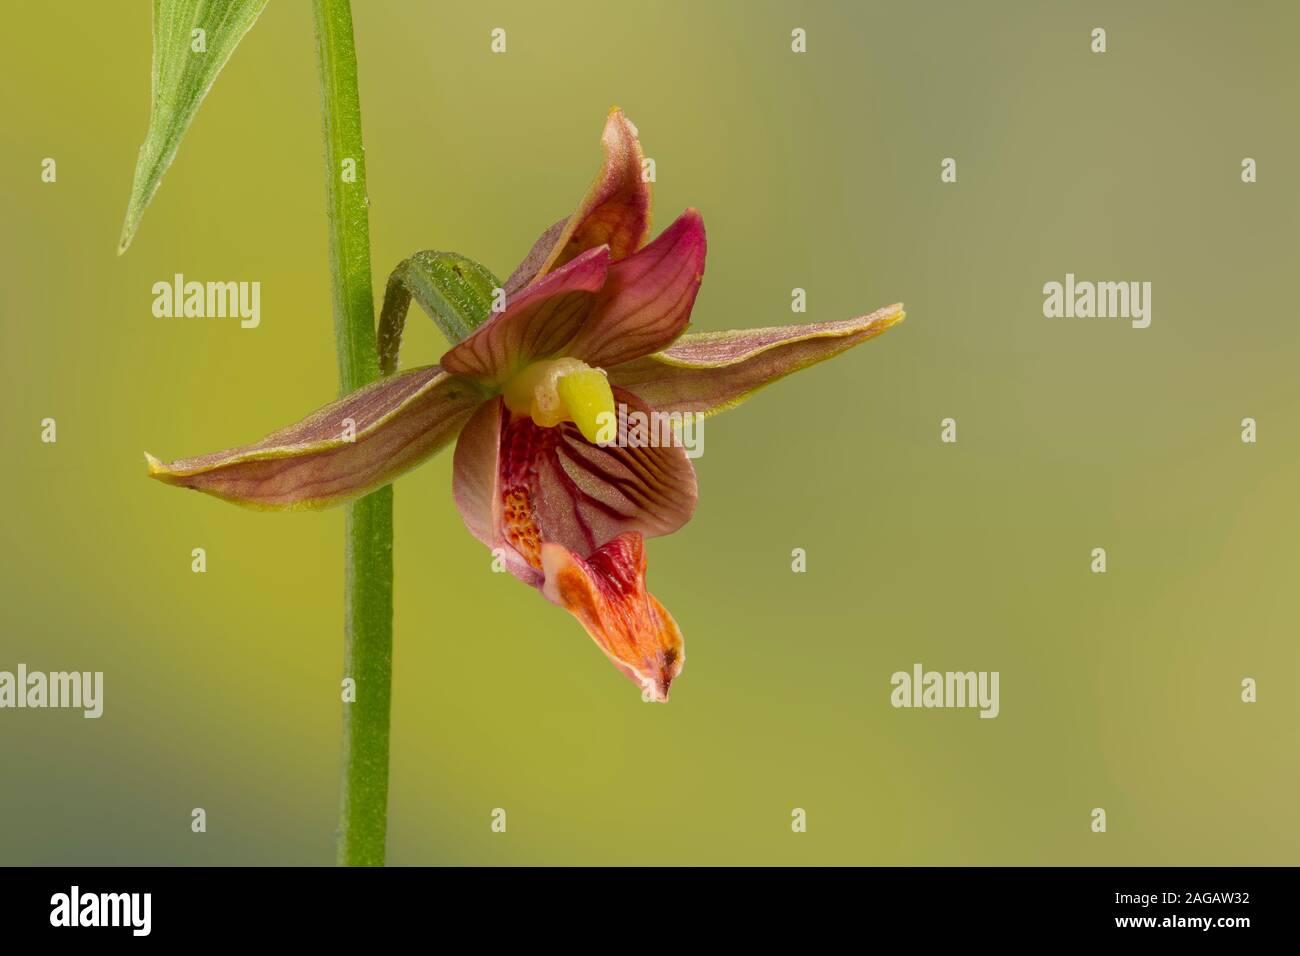 Yellow-orange Garden Orchid, or Giant Helleborine, Epipactis gigantea, in cultivation Stock Photo